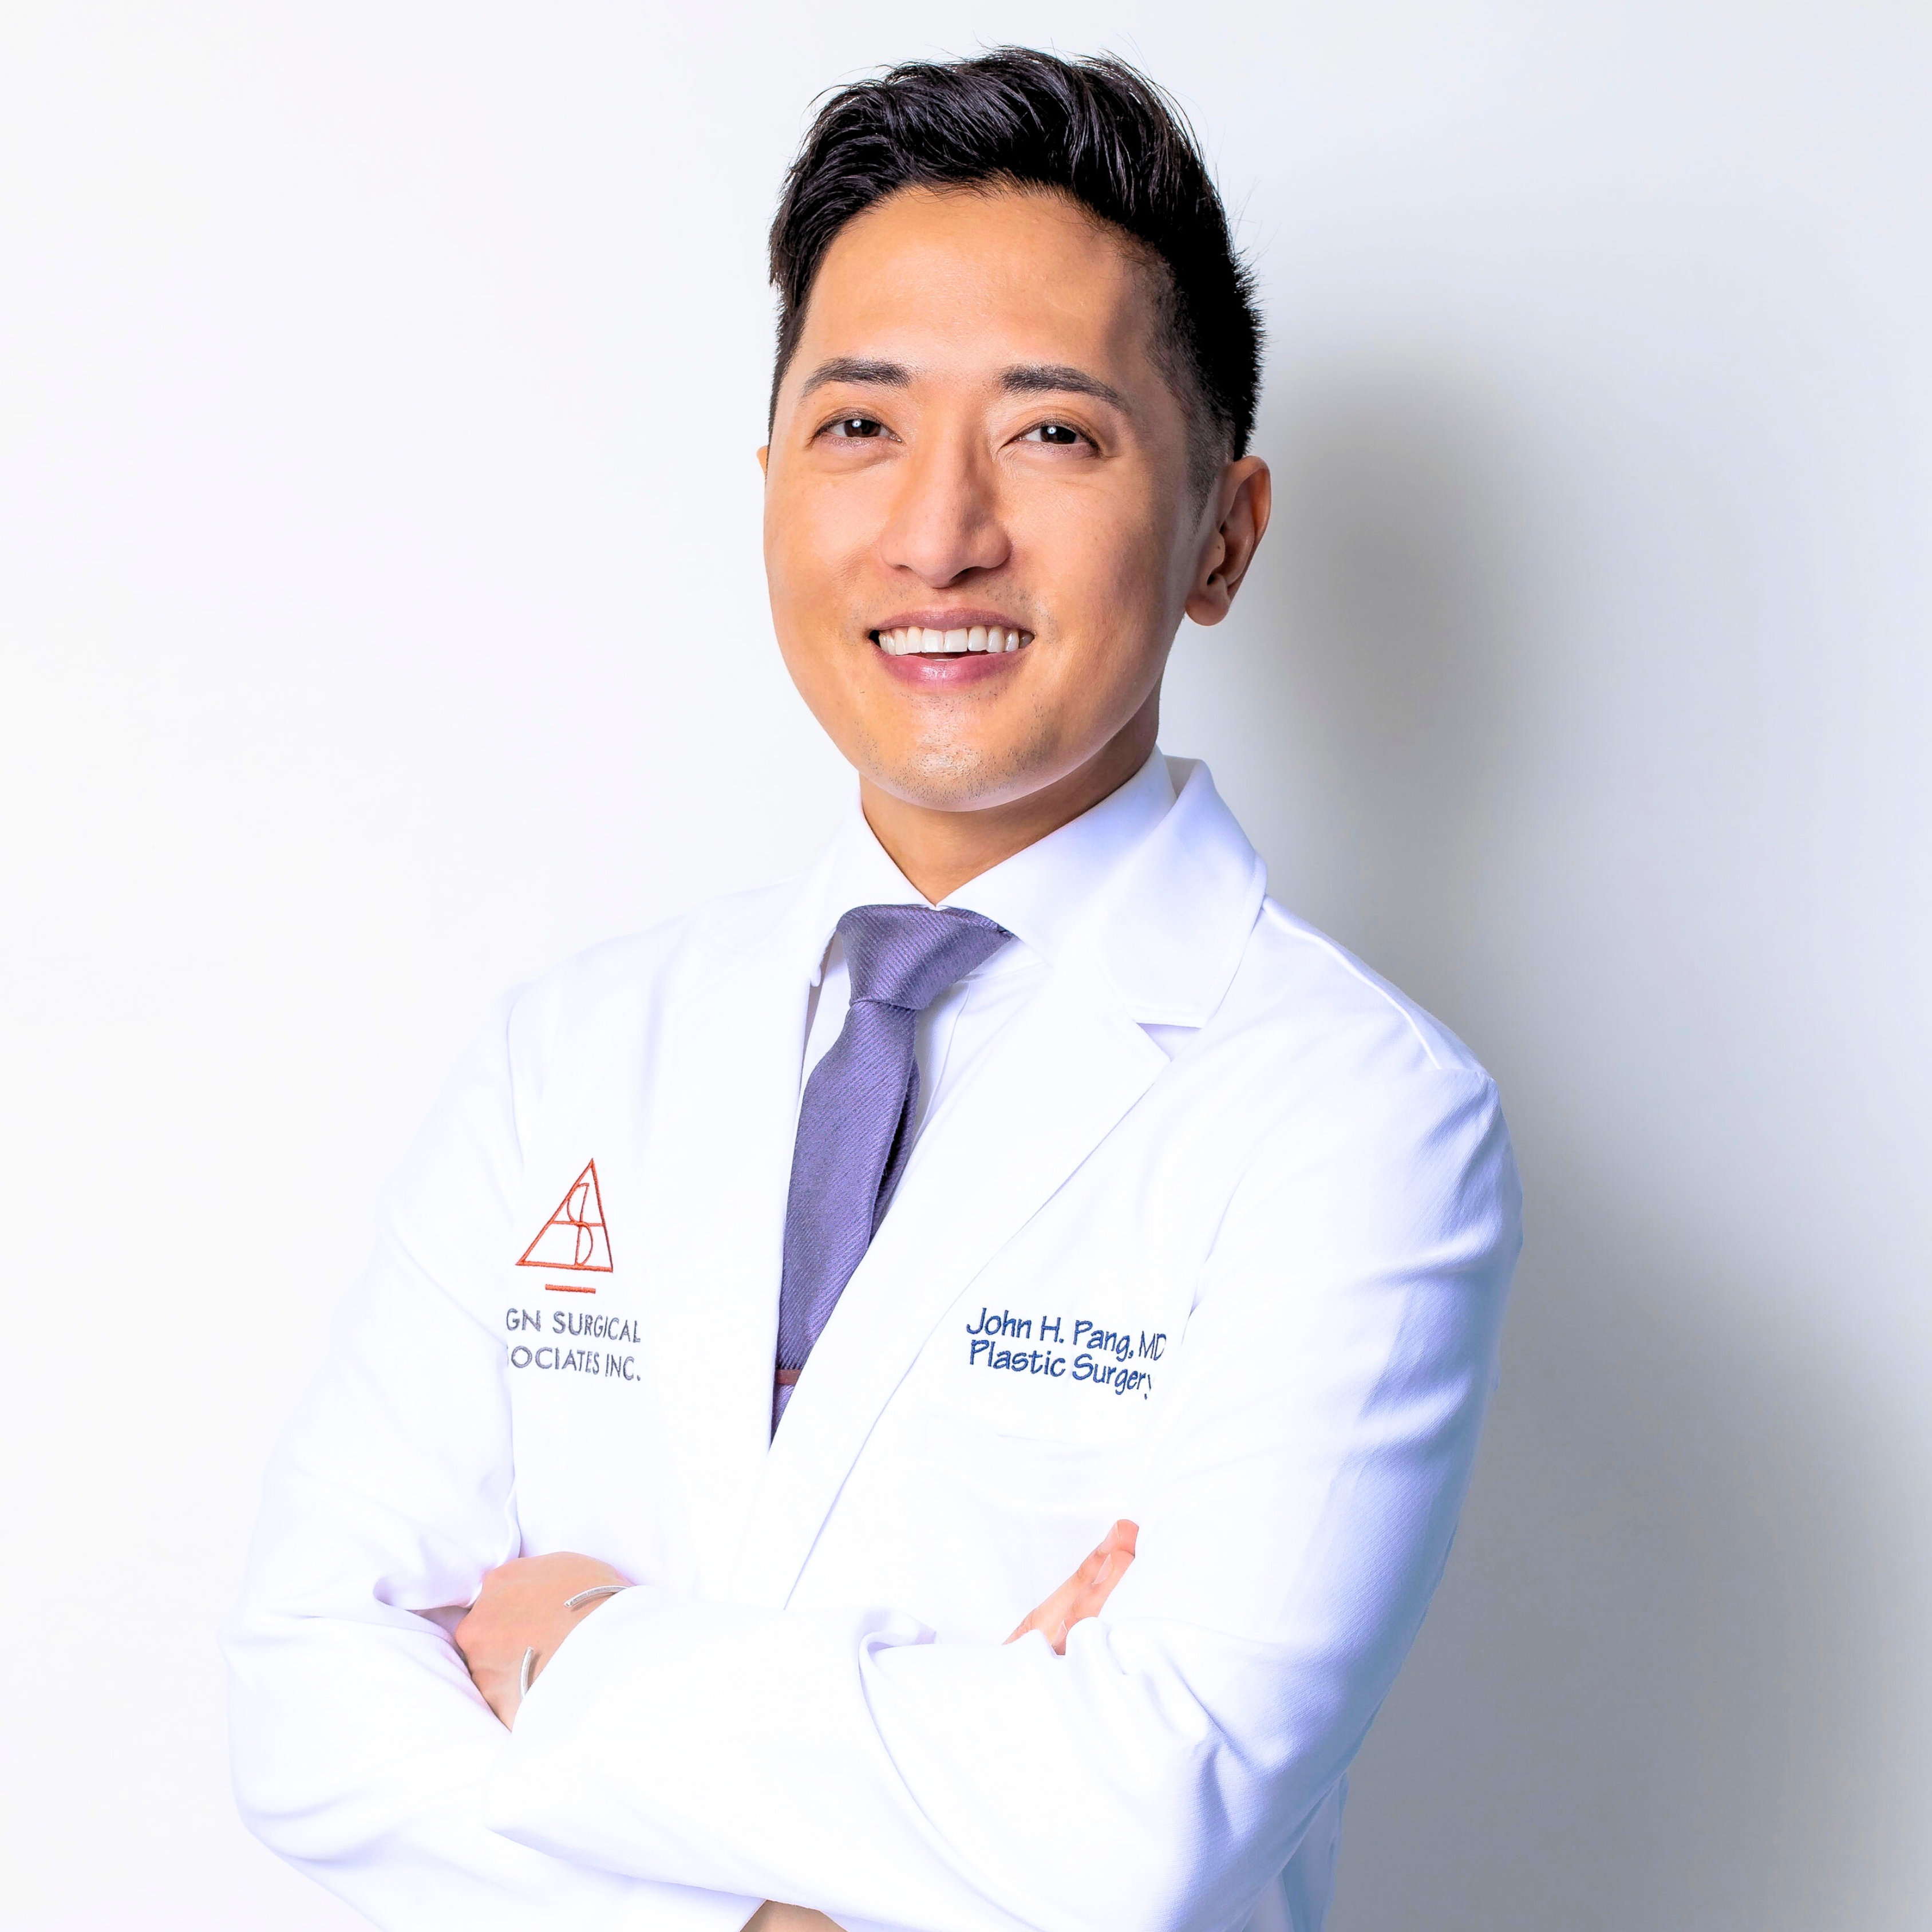 Dr. John Pang, plastic and reconstructive surgeon at Align Surgical Associates Inc.